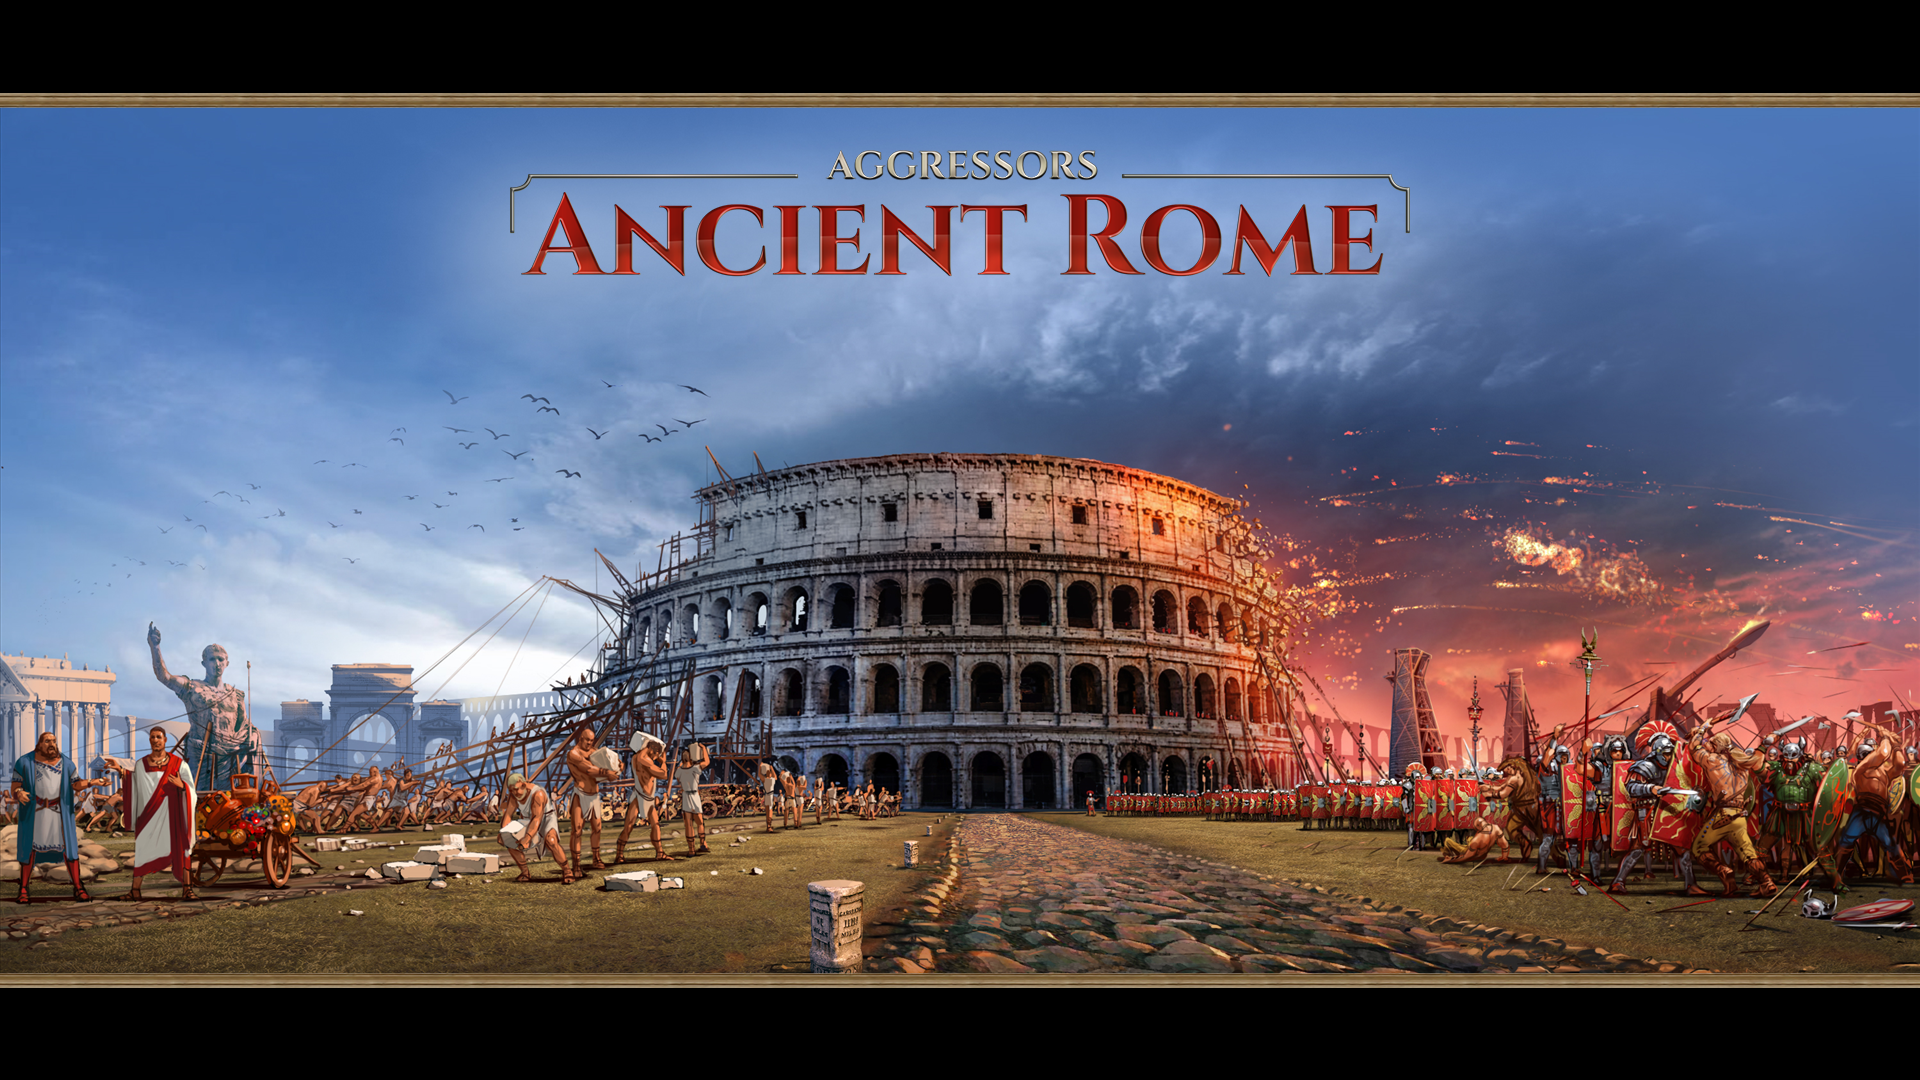 Древний рим 4 буквы. Древний Рим. Aggressors: Ancient Rome. Игры про древний Рим. Древний Рим обои.